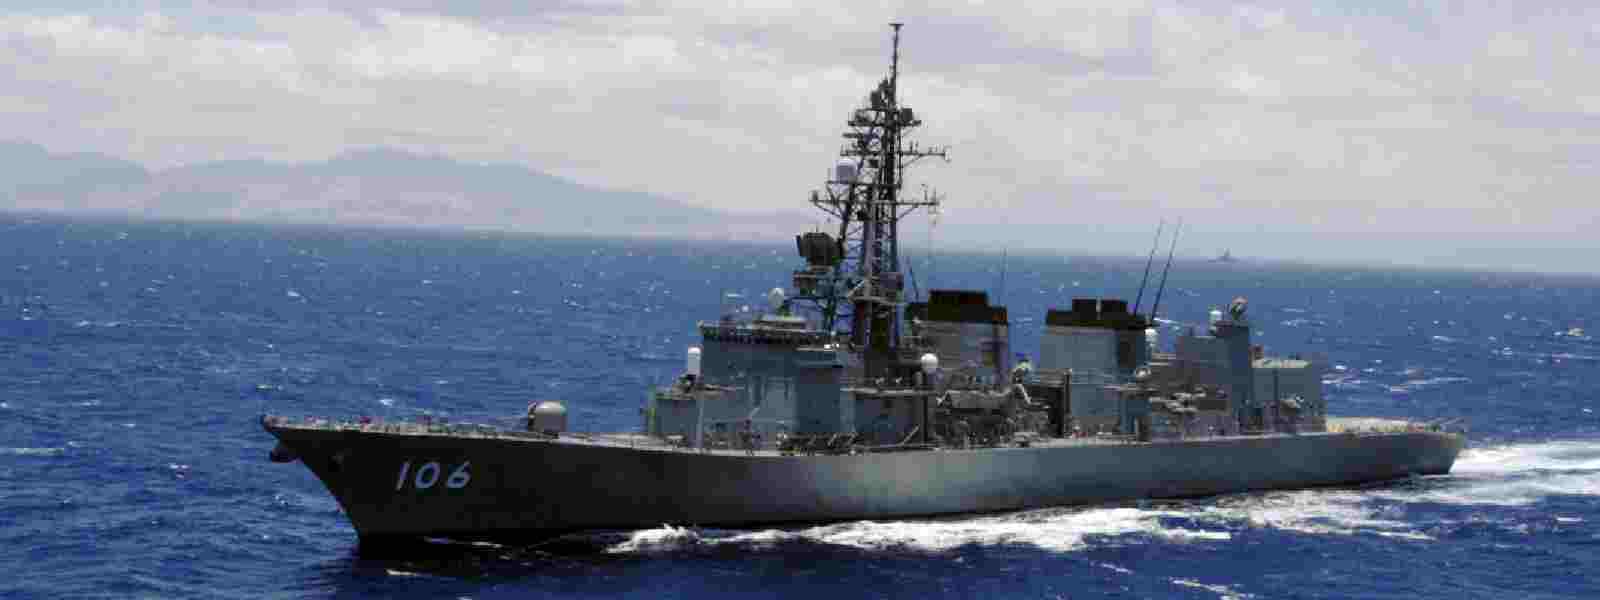 Japanese Destroyer Samidare reaches Colombo Port